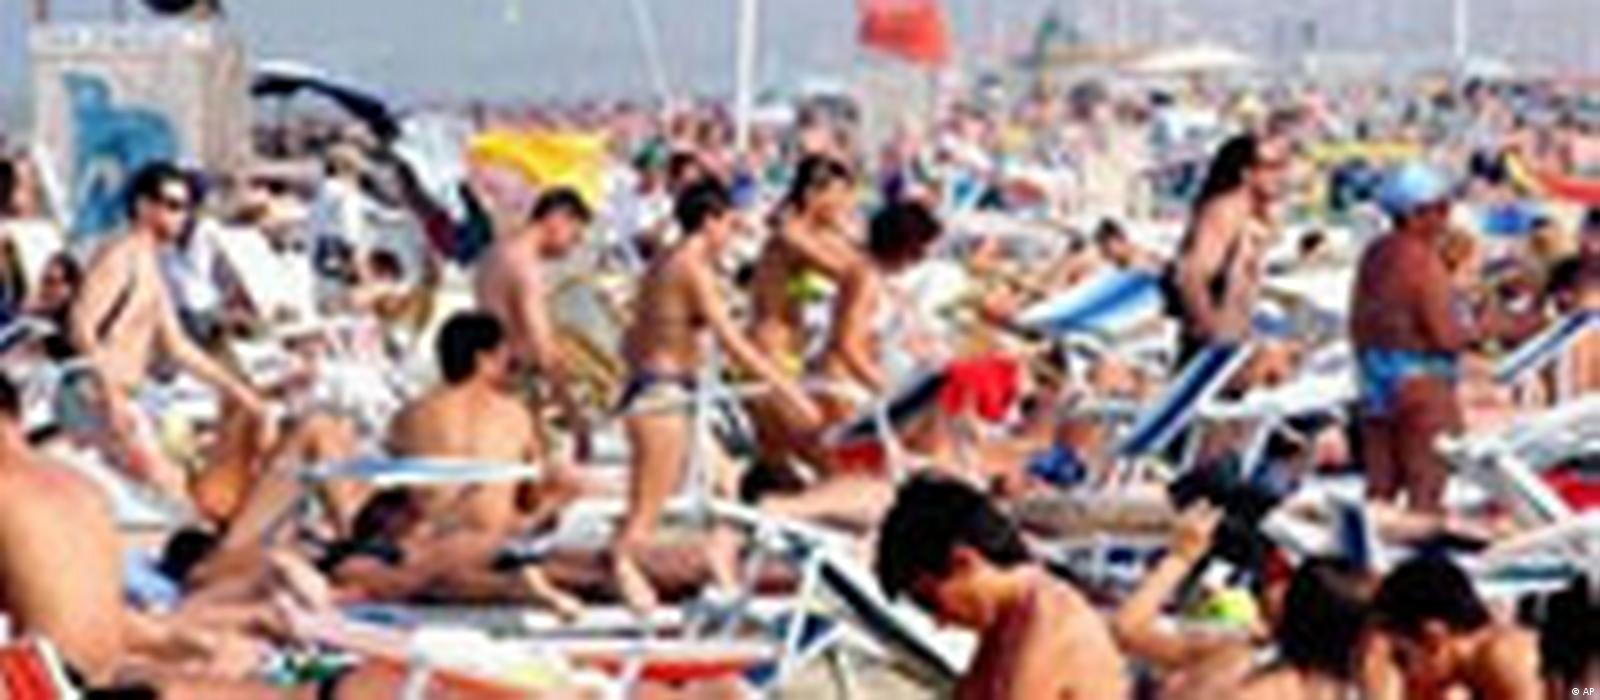 Topless Beach Sex Videos - Germans Angry About Italian Beach Ban â€“ DW â€“ 07/31/2005